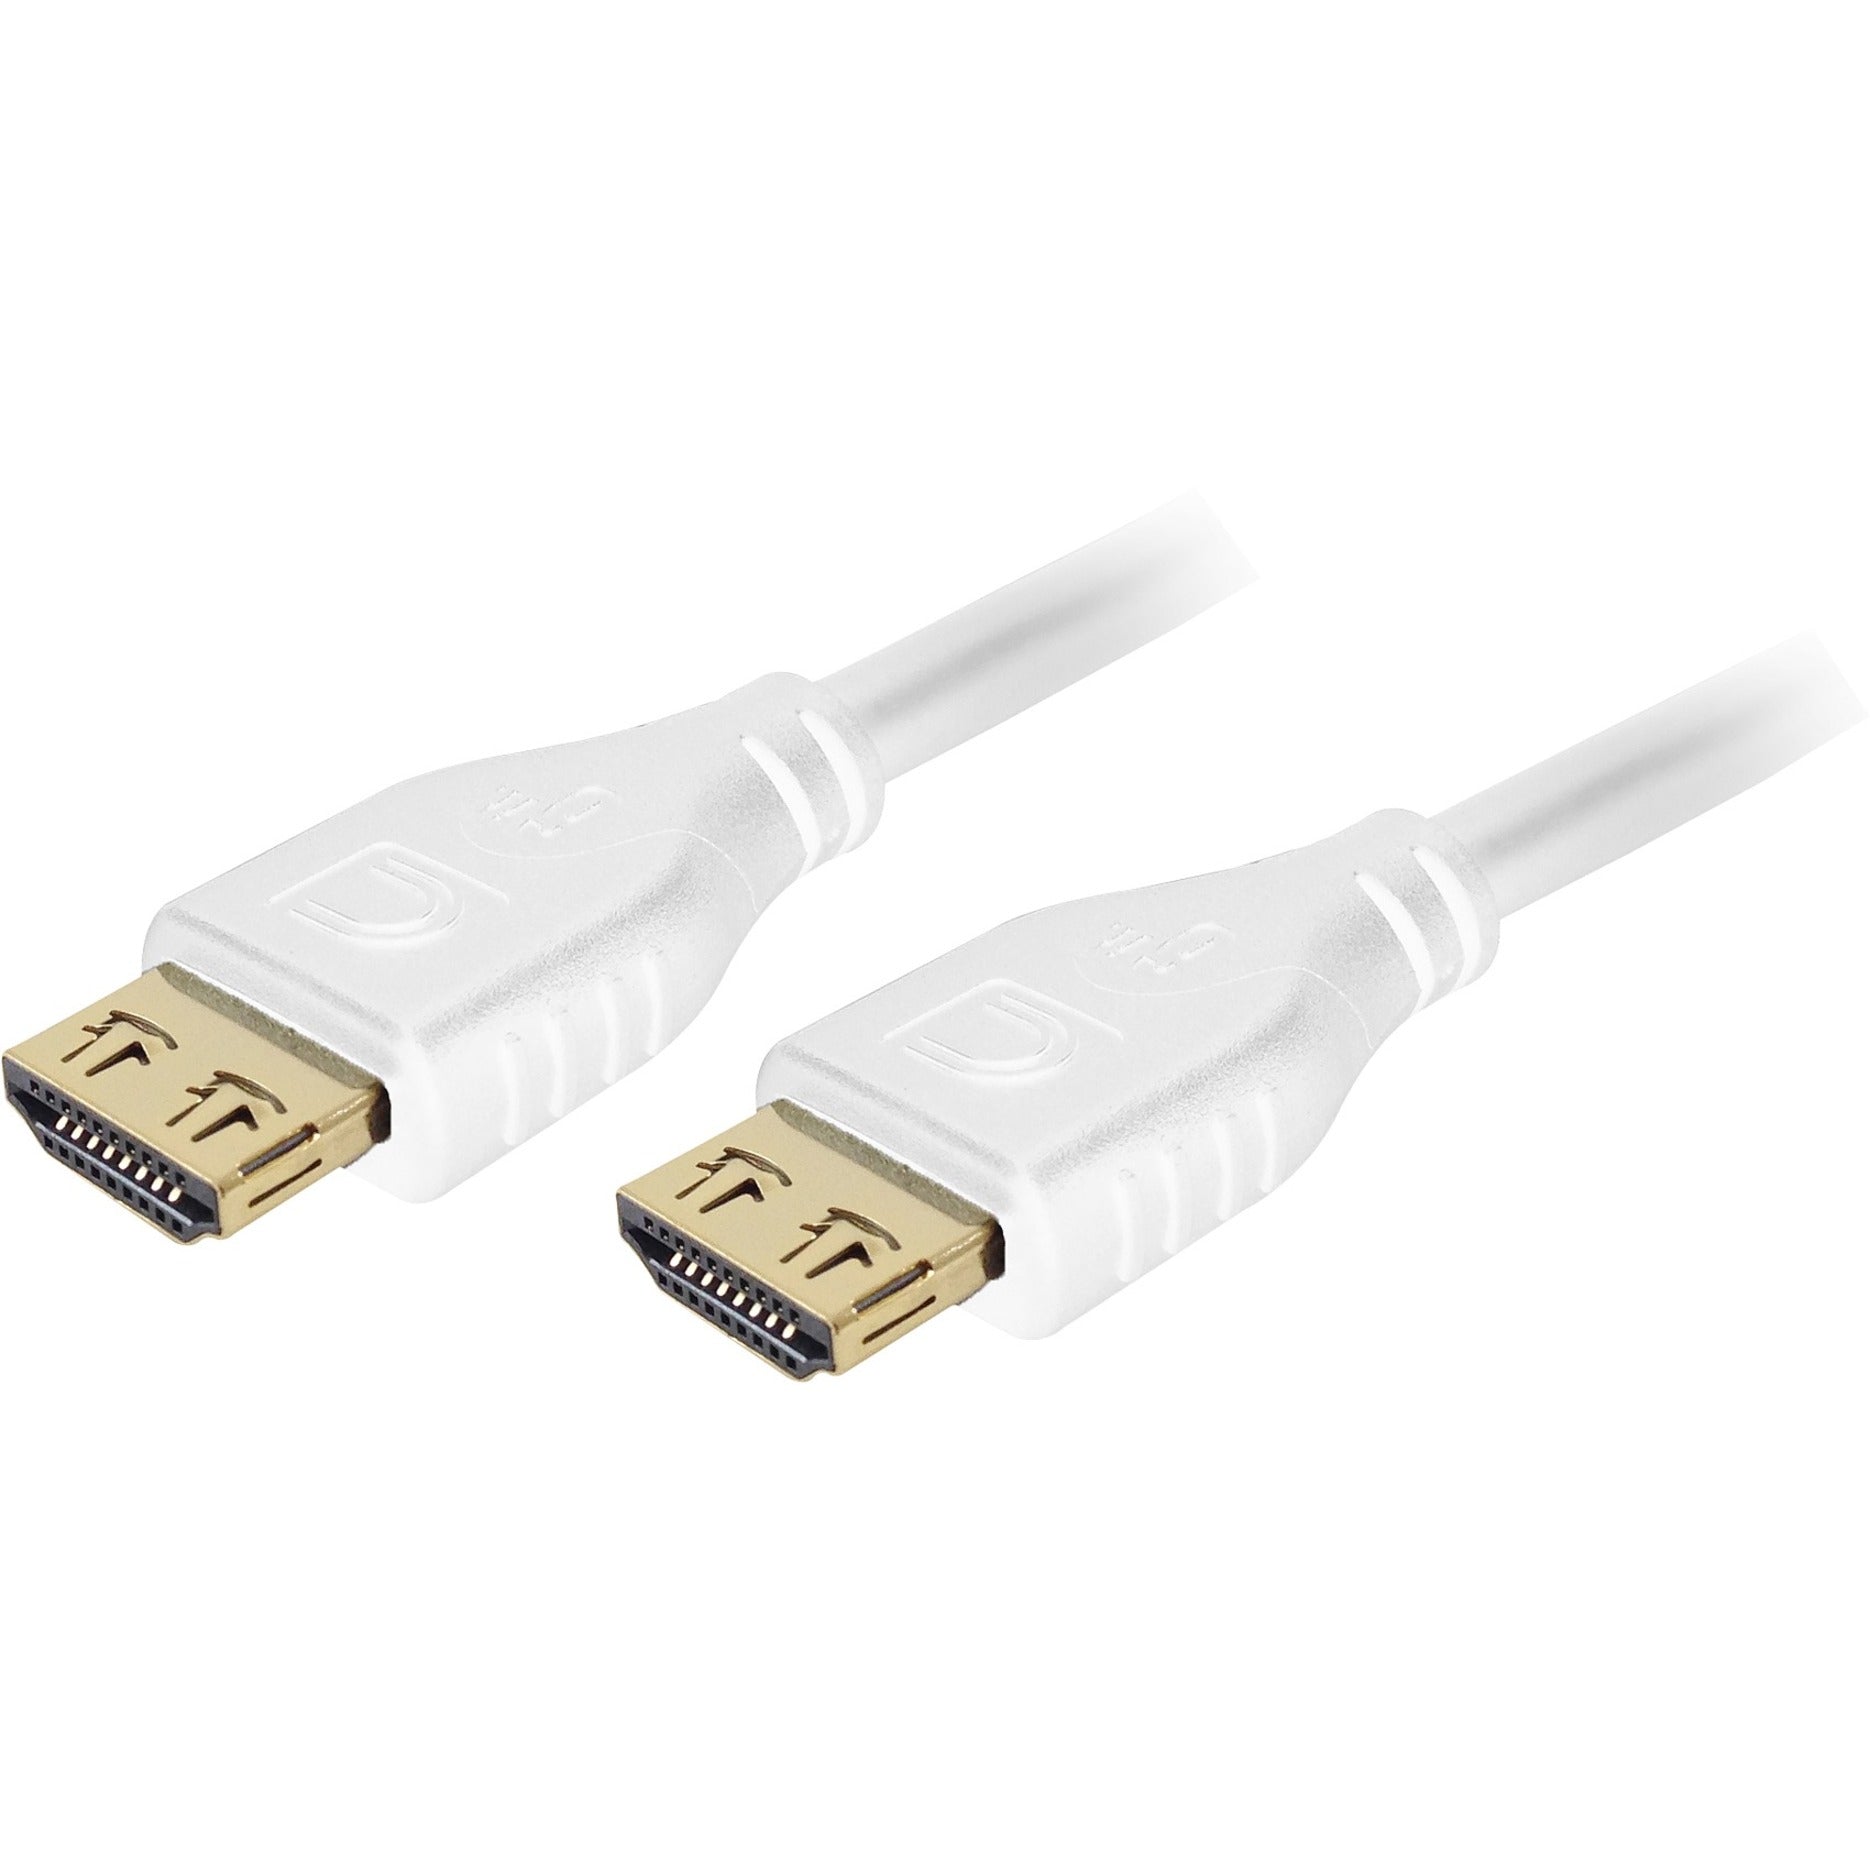 Comprehensive MHD-MHD-15PROWHT MicroFlex HDMI M/M Cable, 15FT, White, Pro AV/IT Series, Lifetime Warranty